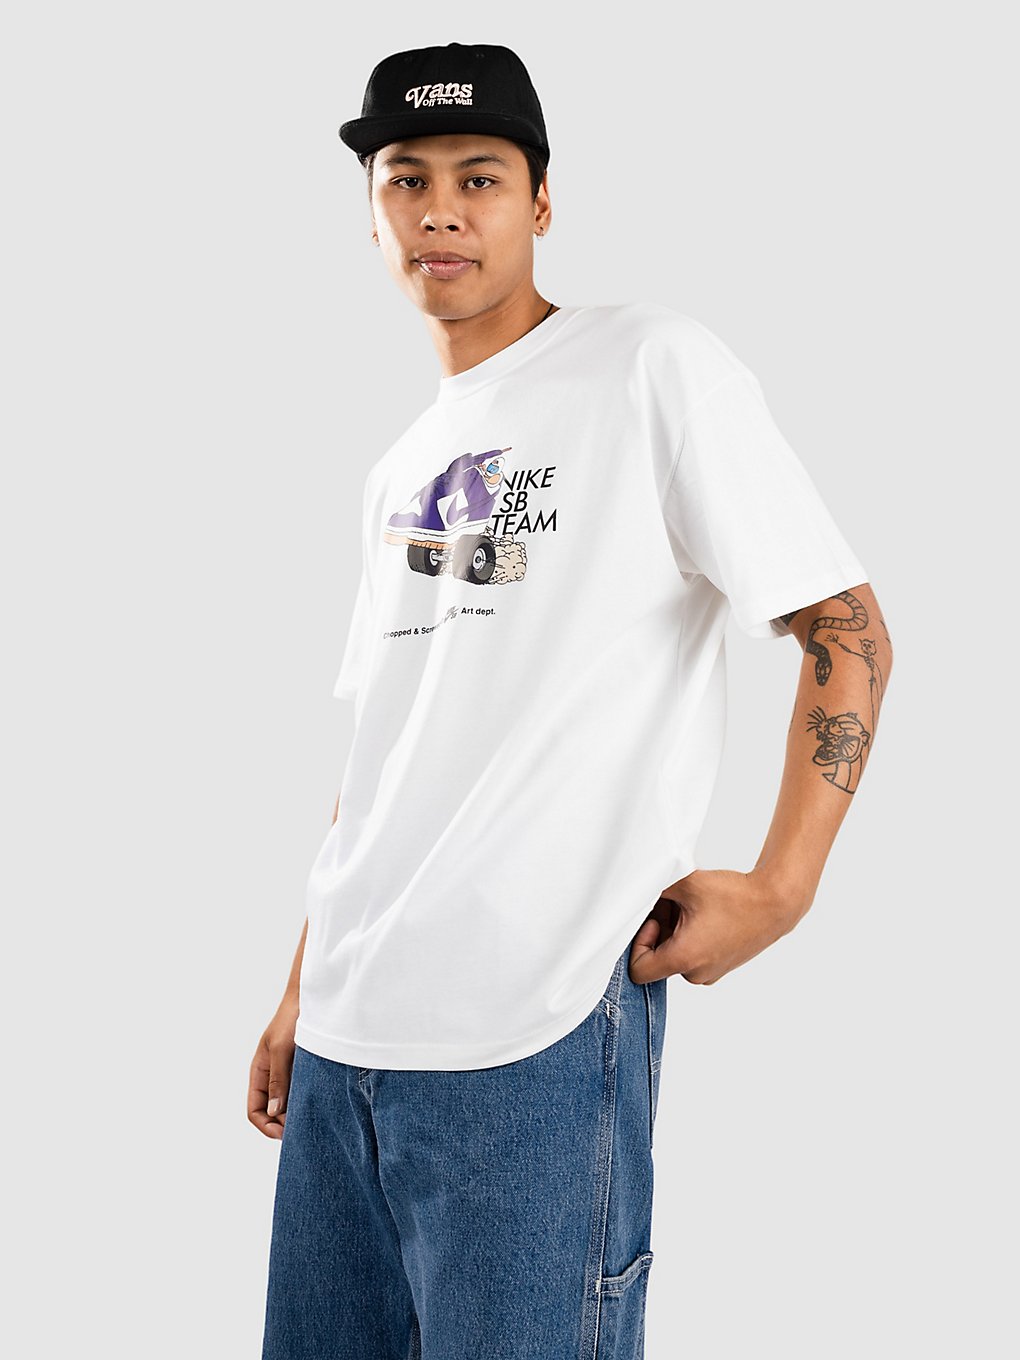 Nike Sb Dunkteam T-Shirt wit